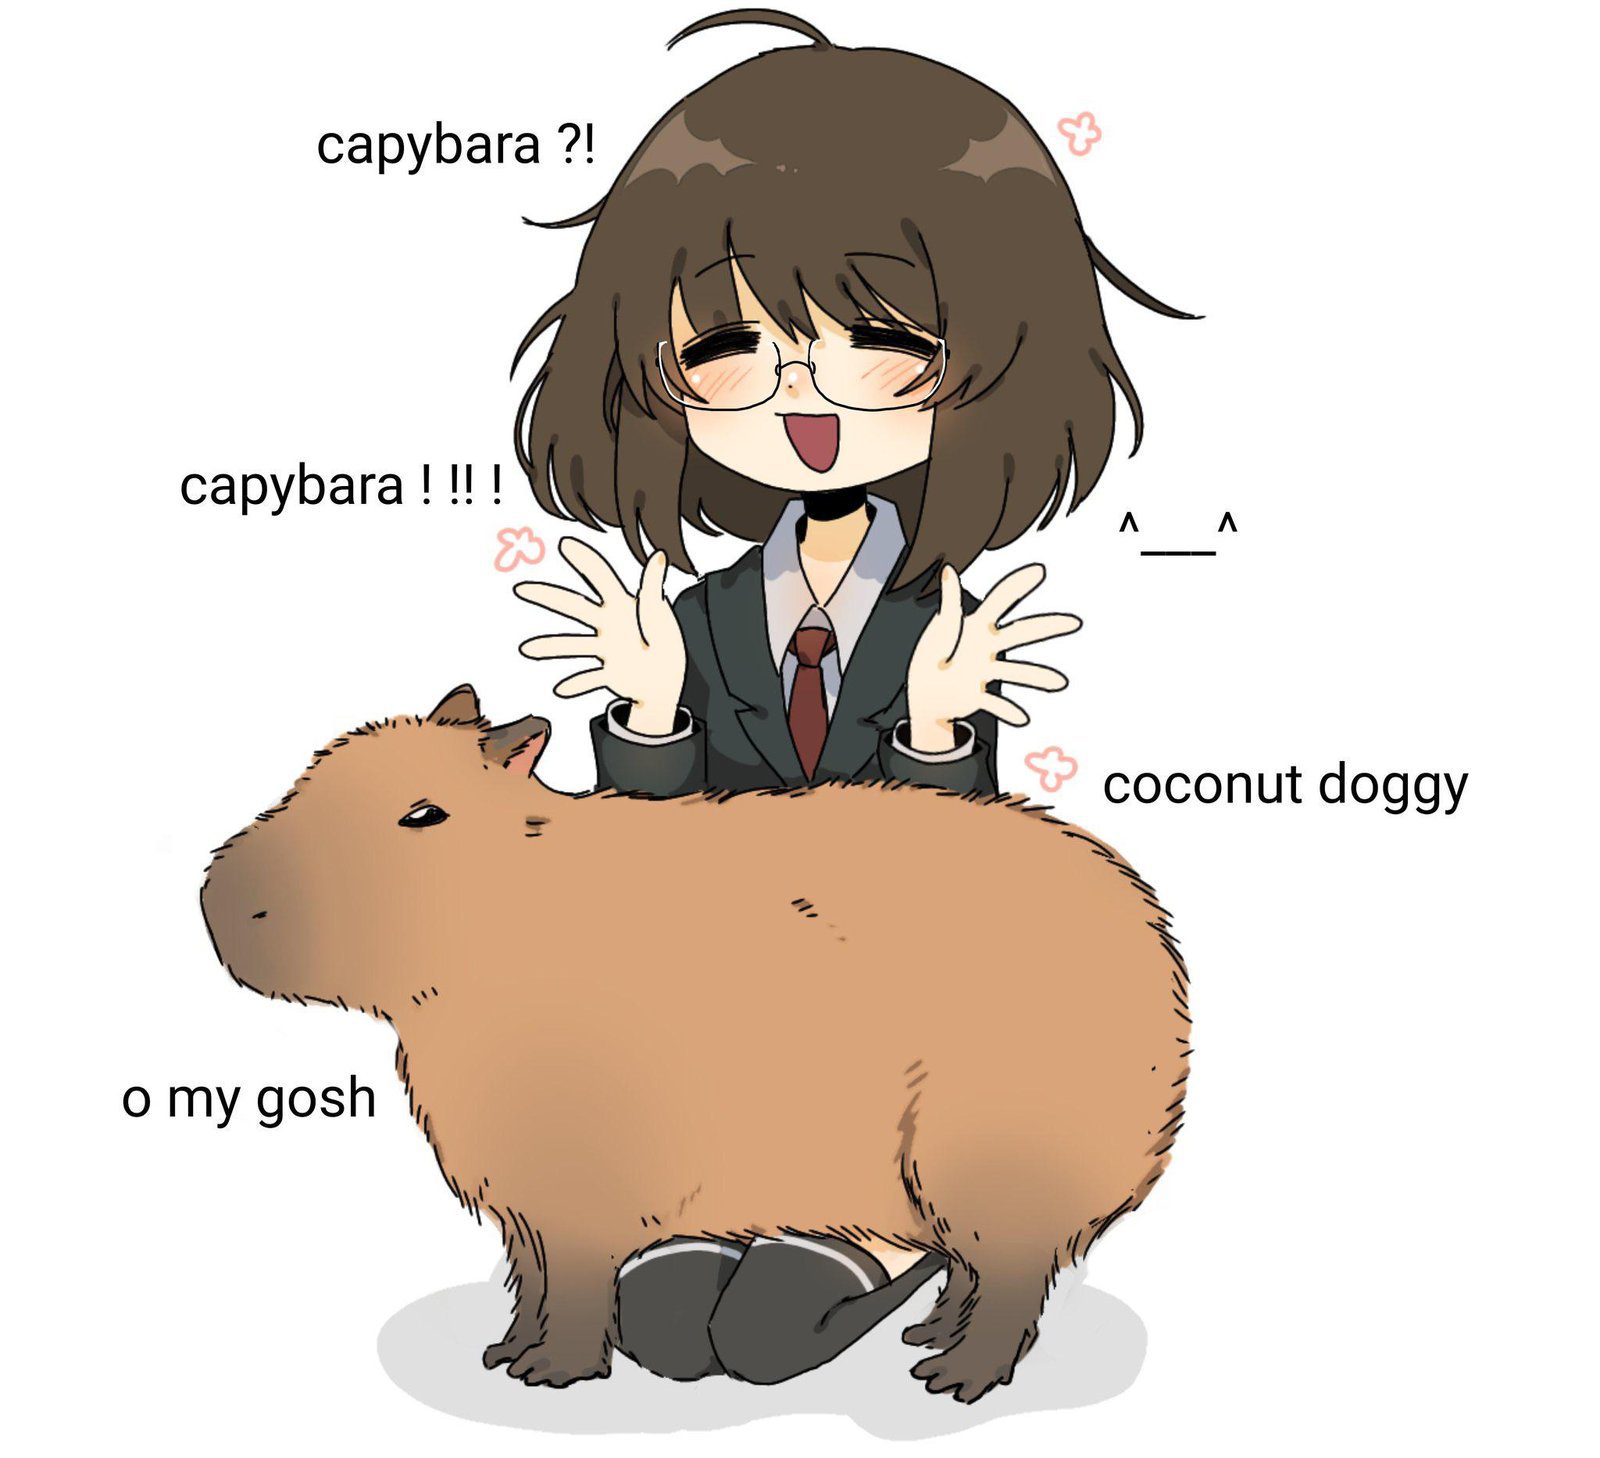 The origins of the capybara meme